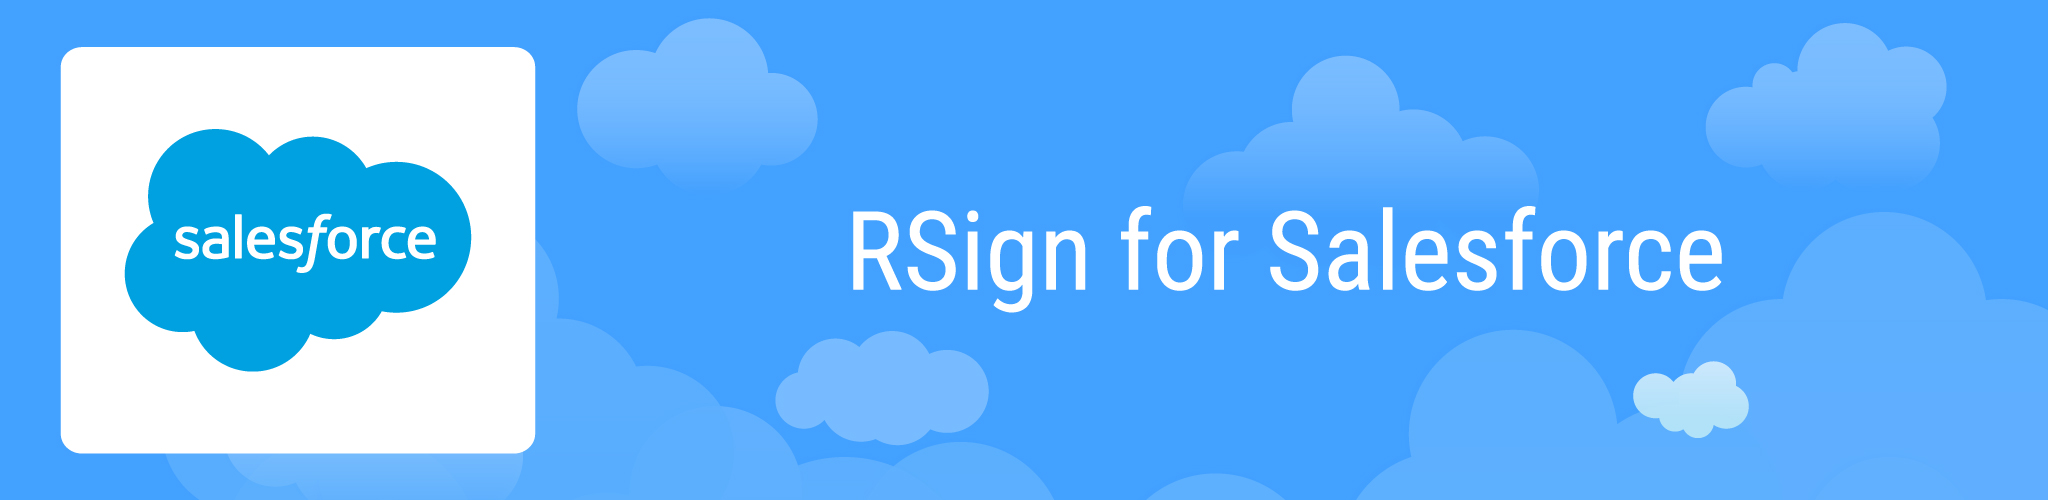 RSign for Salesforce